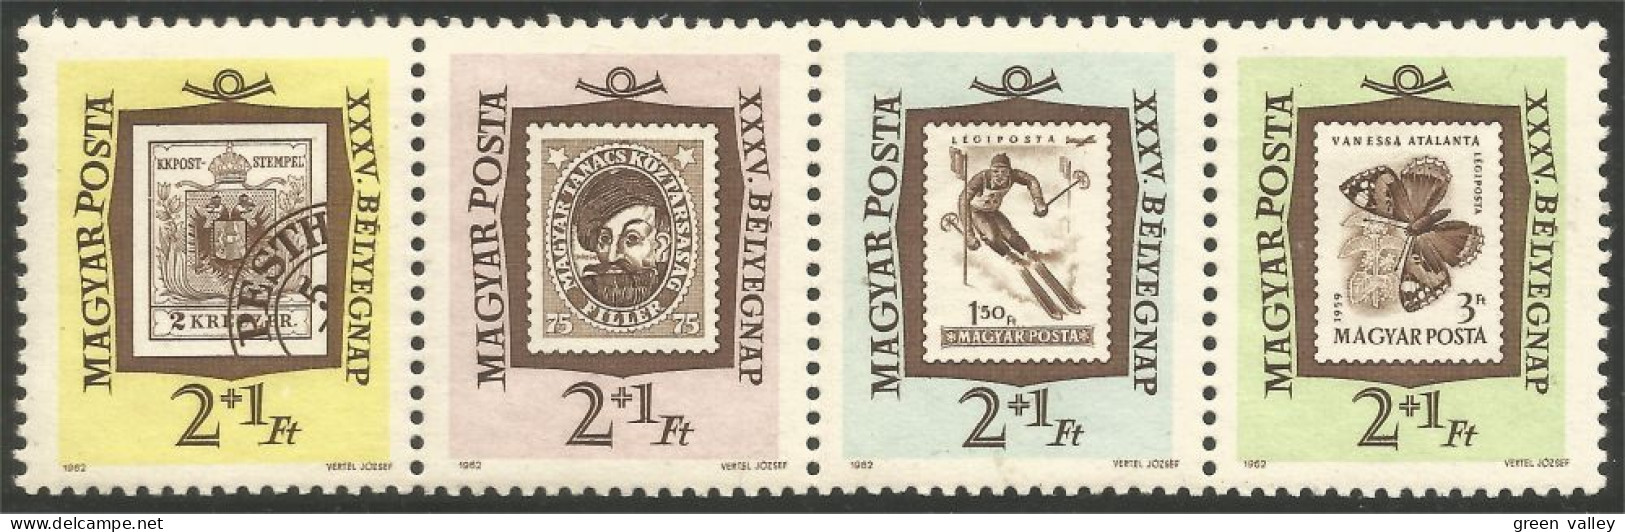 494 Hongrie 1962 Stamp Day Se-tenant Strip MNH ** Neuf SC (HON-341) - Tag Der Briefmarke